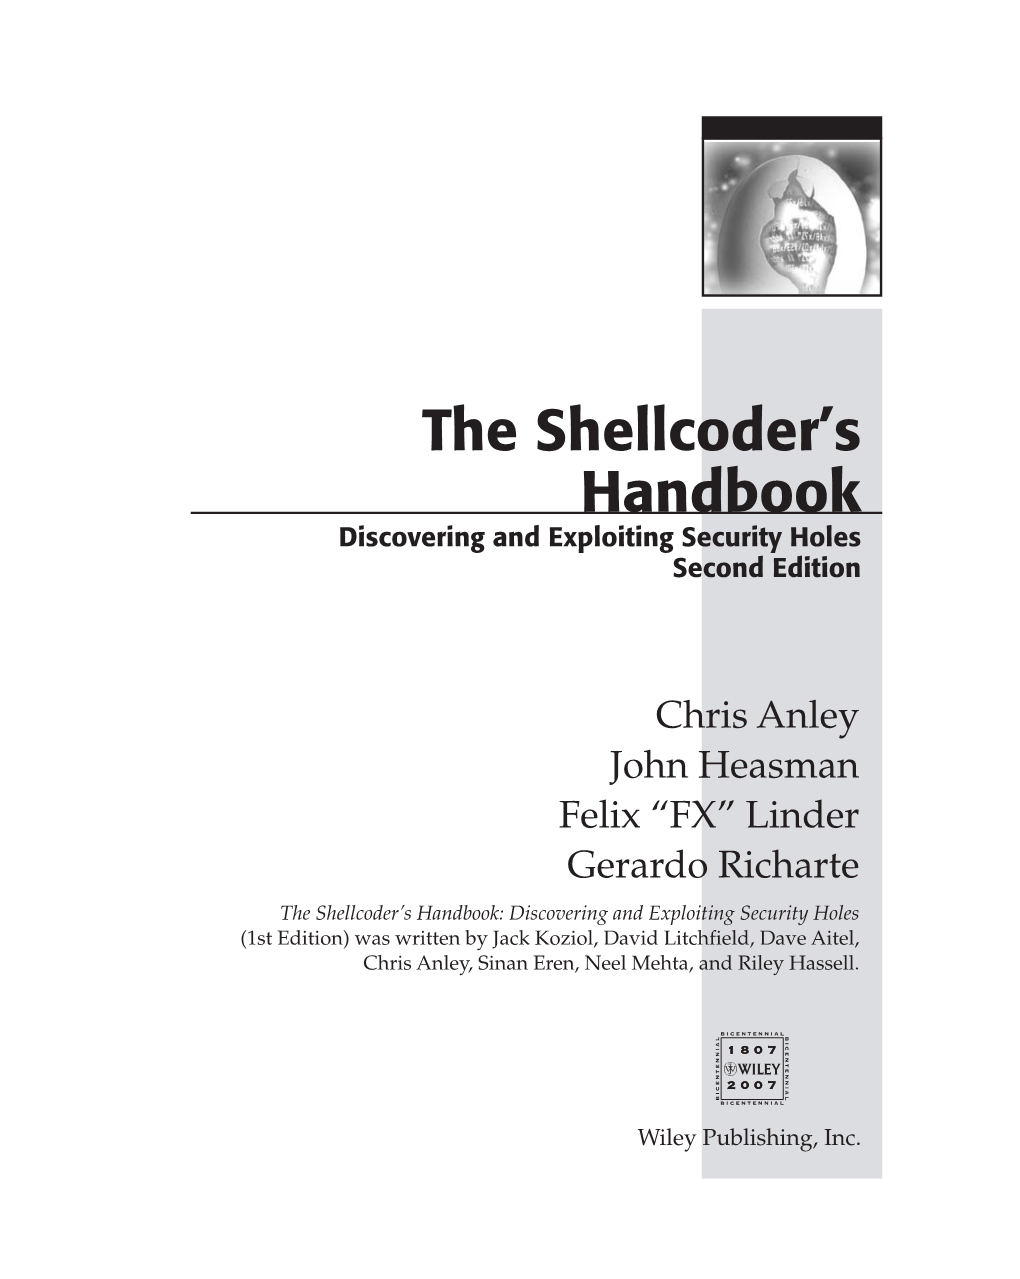 The Shellcoder's Handbook